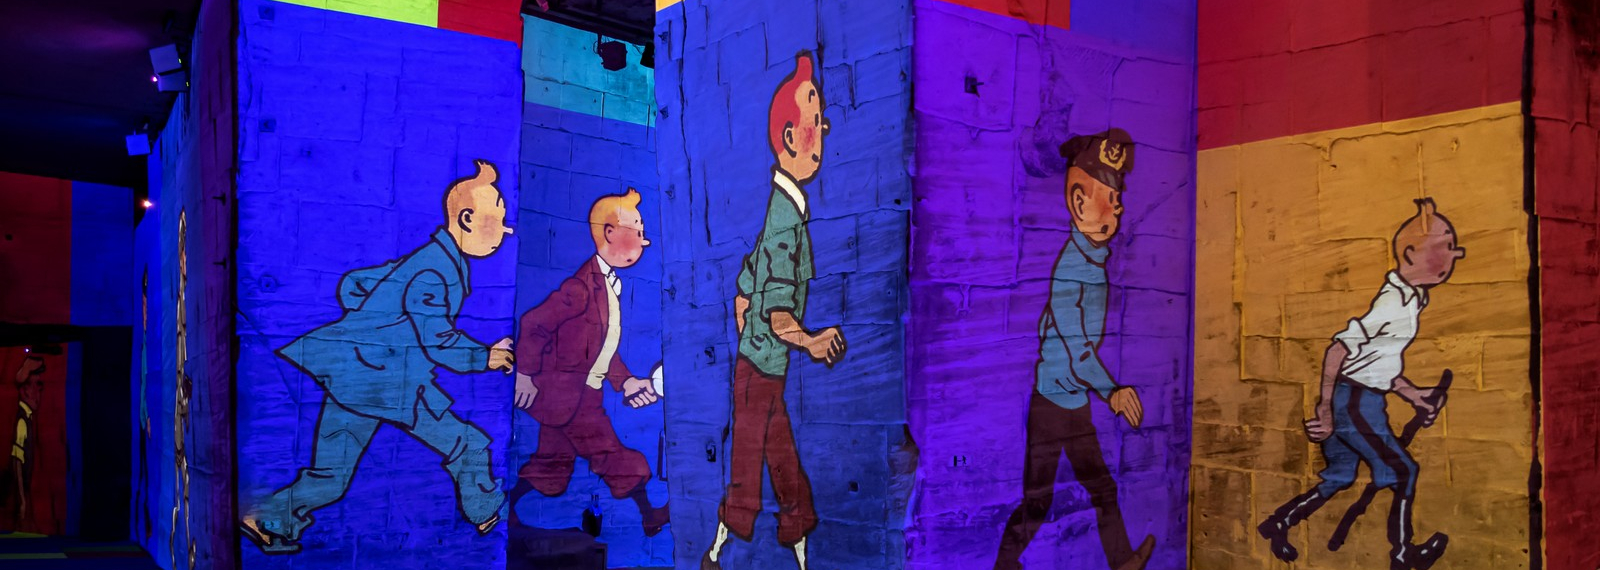 Tintin, das immersive Abenteuer